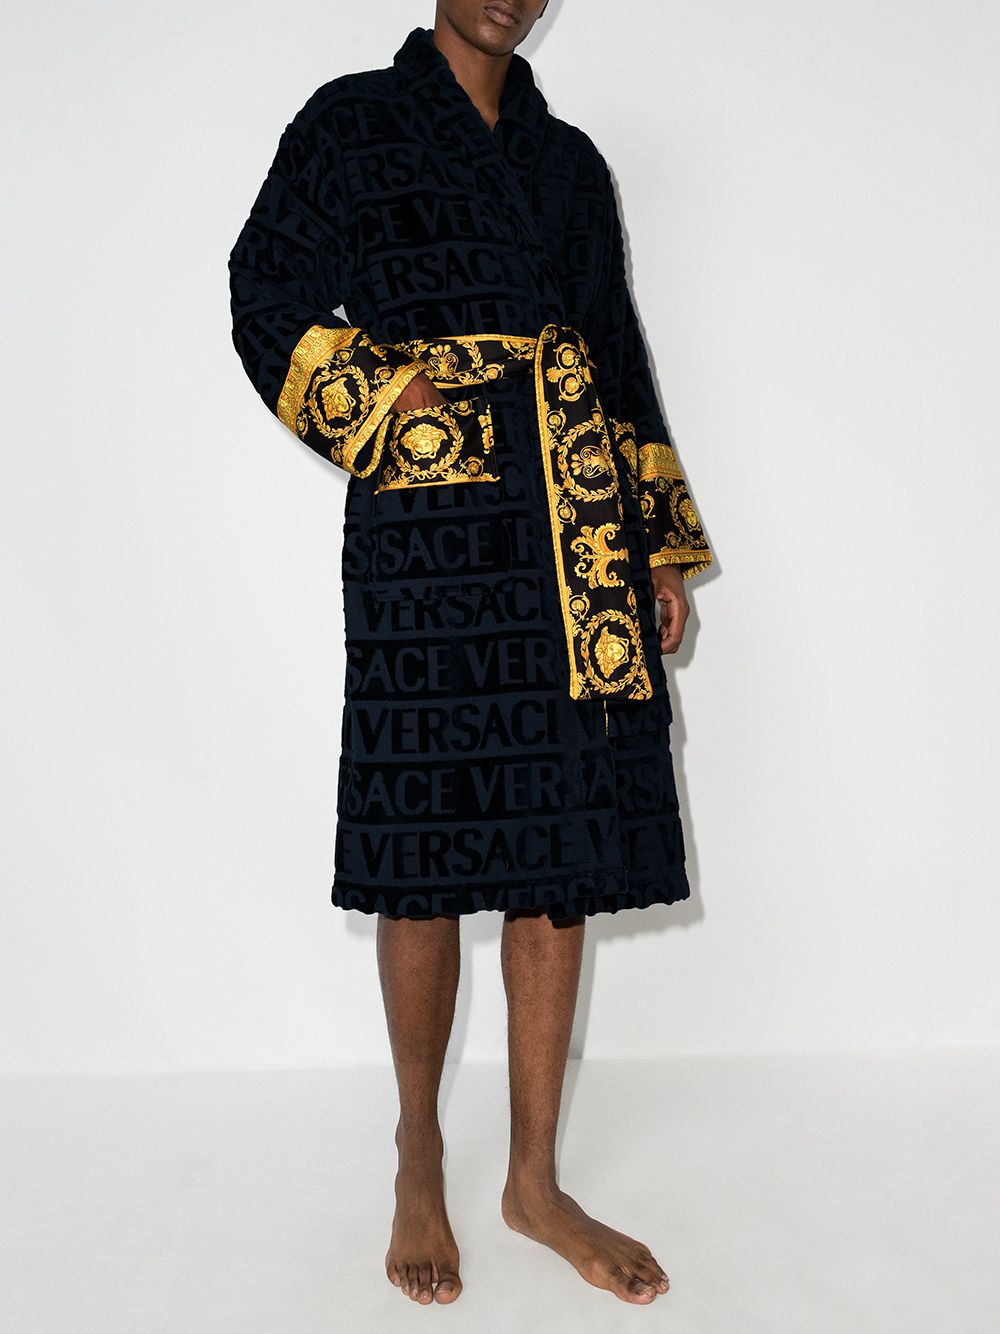 фото Versace халат i love baroque с поясом